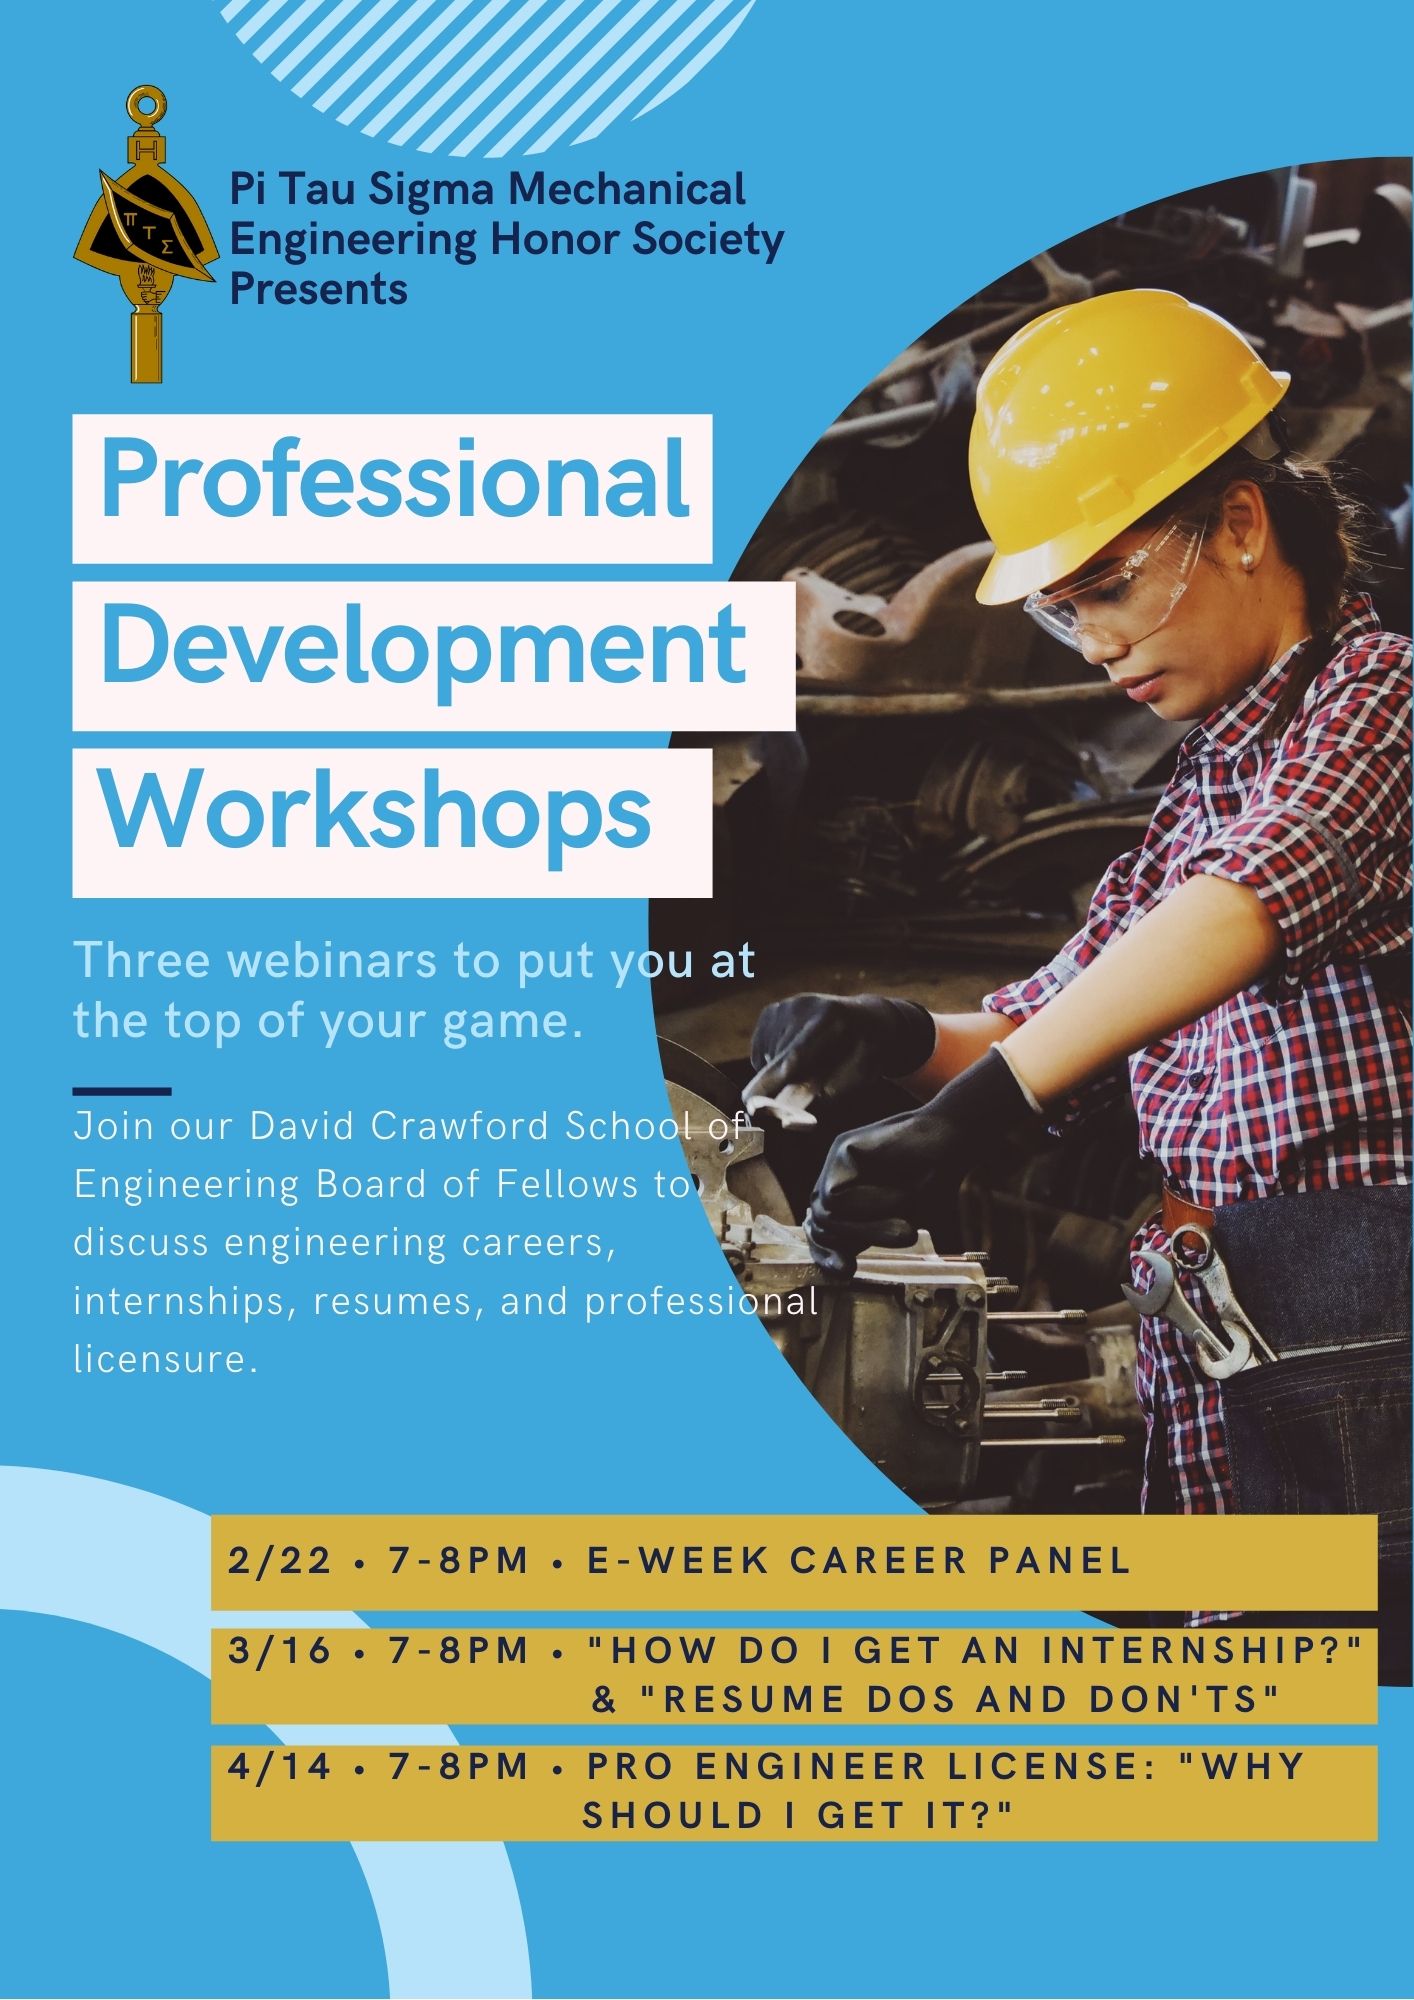 Professional Development Workshop flier